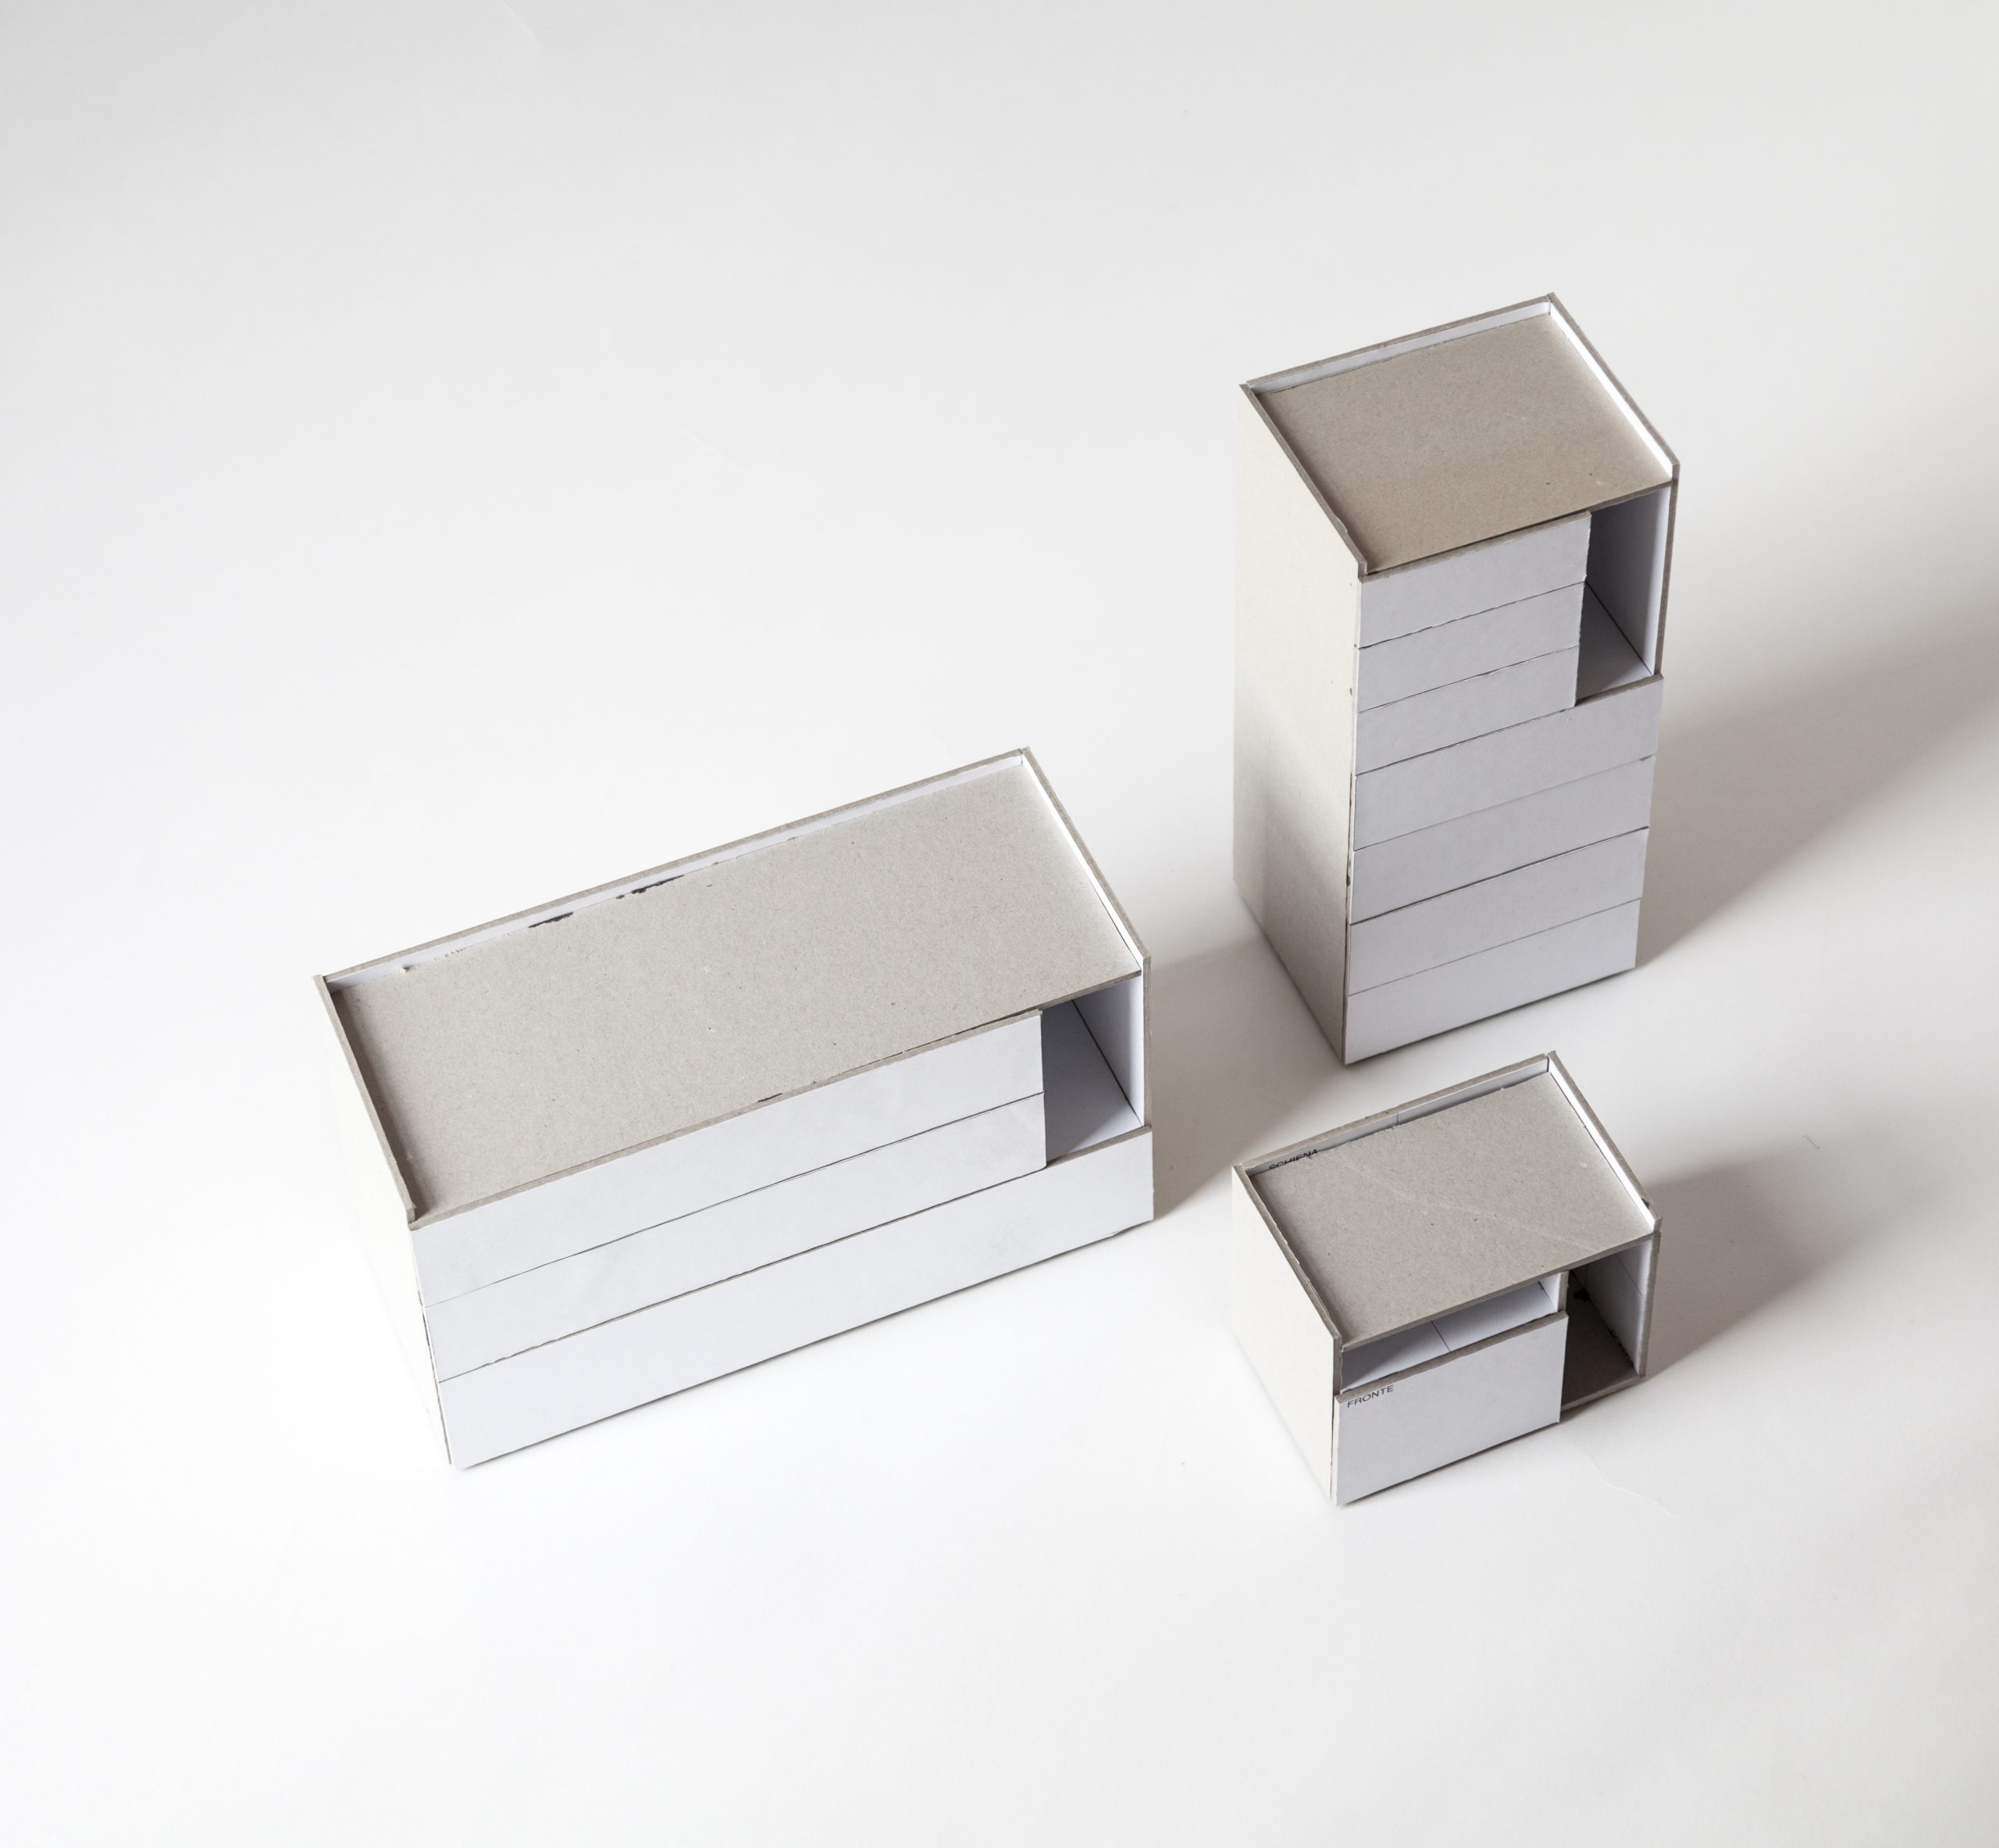 Cardboard mockup of the Tip drawer units by Debiasi Sandri for Lema